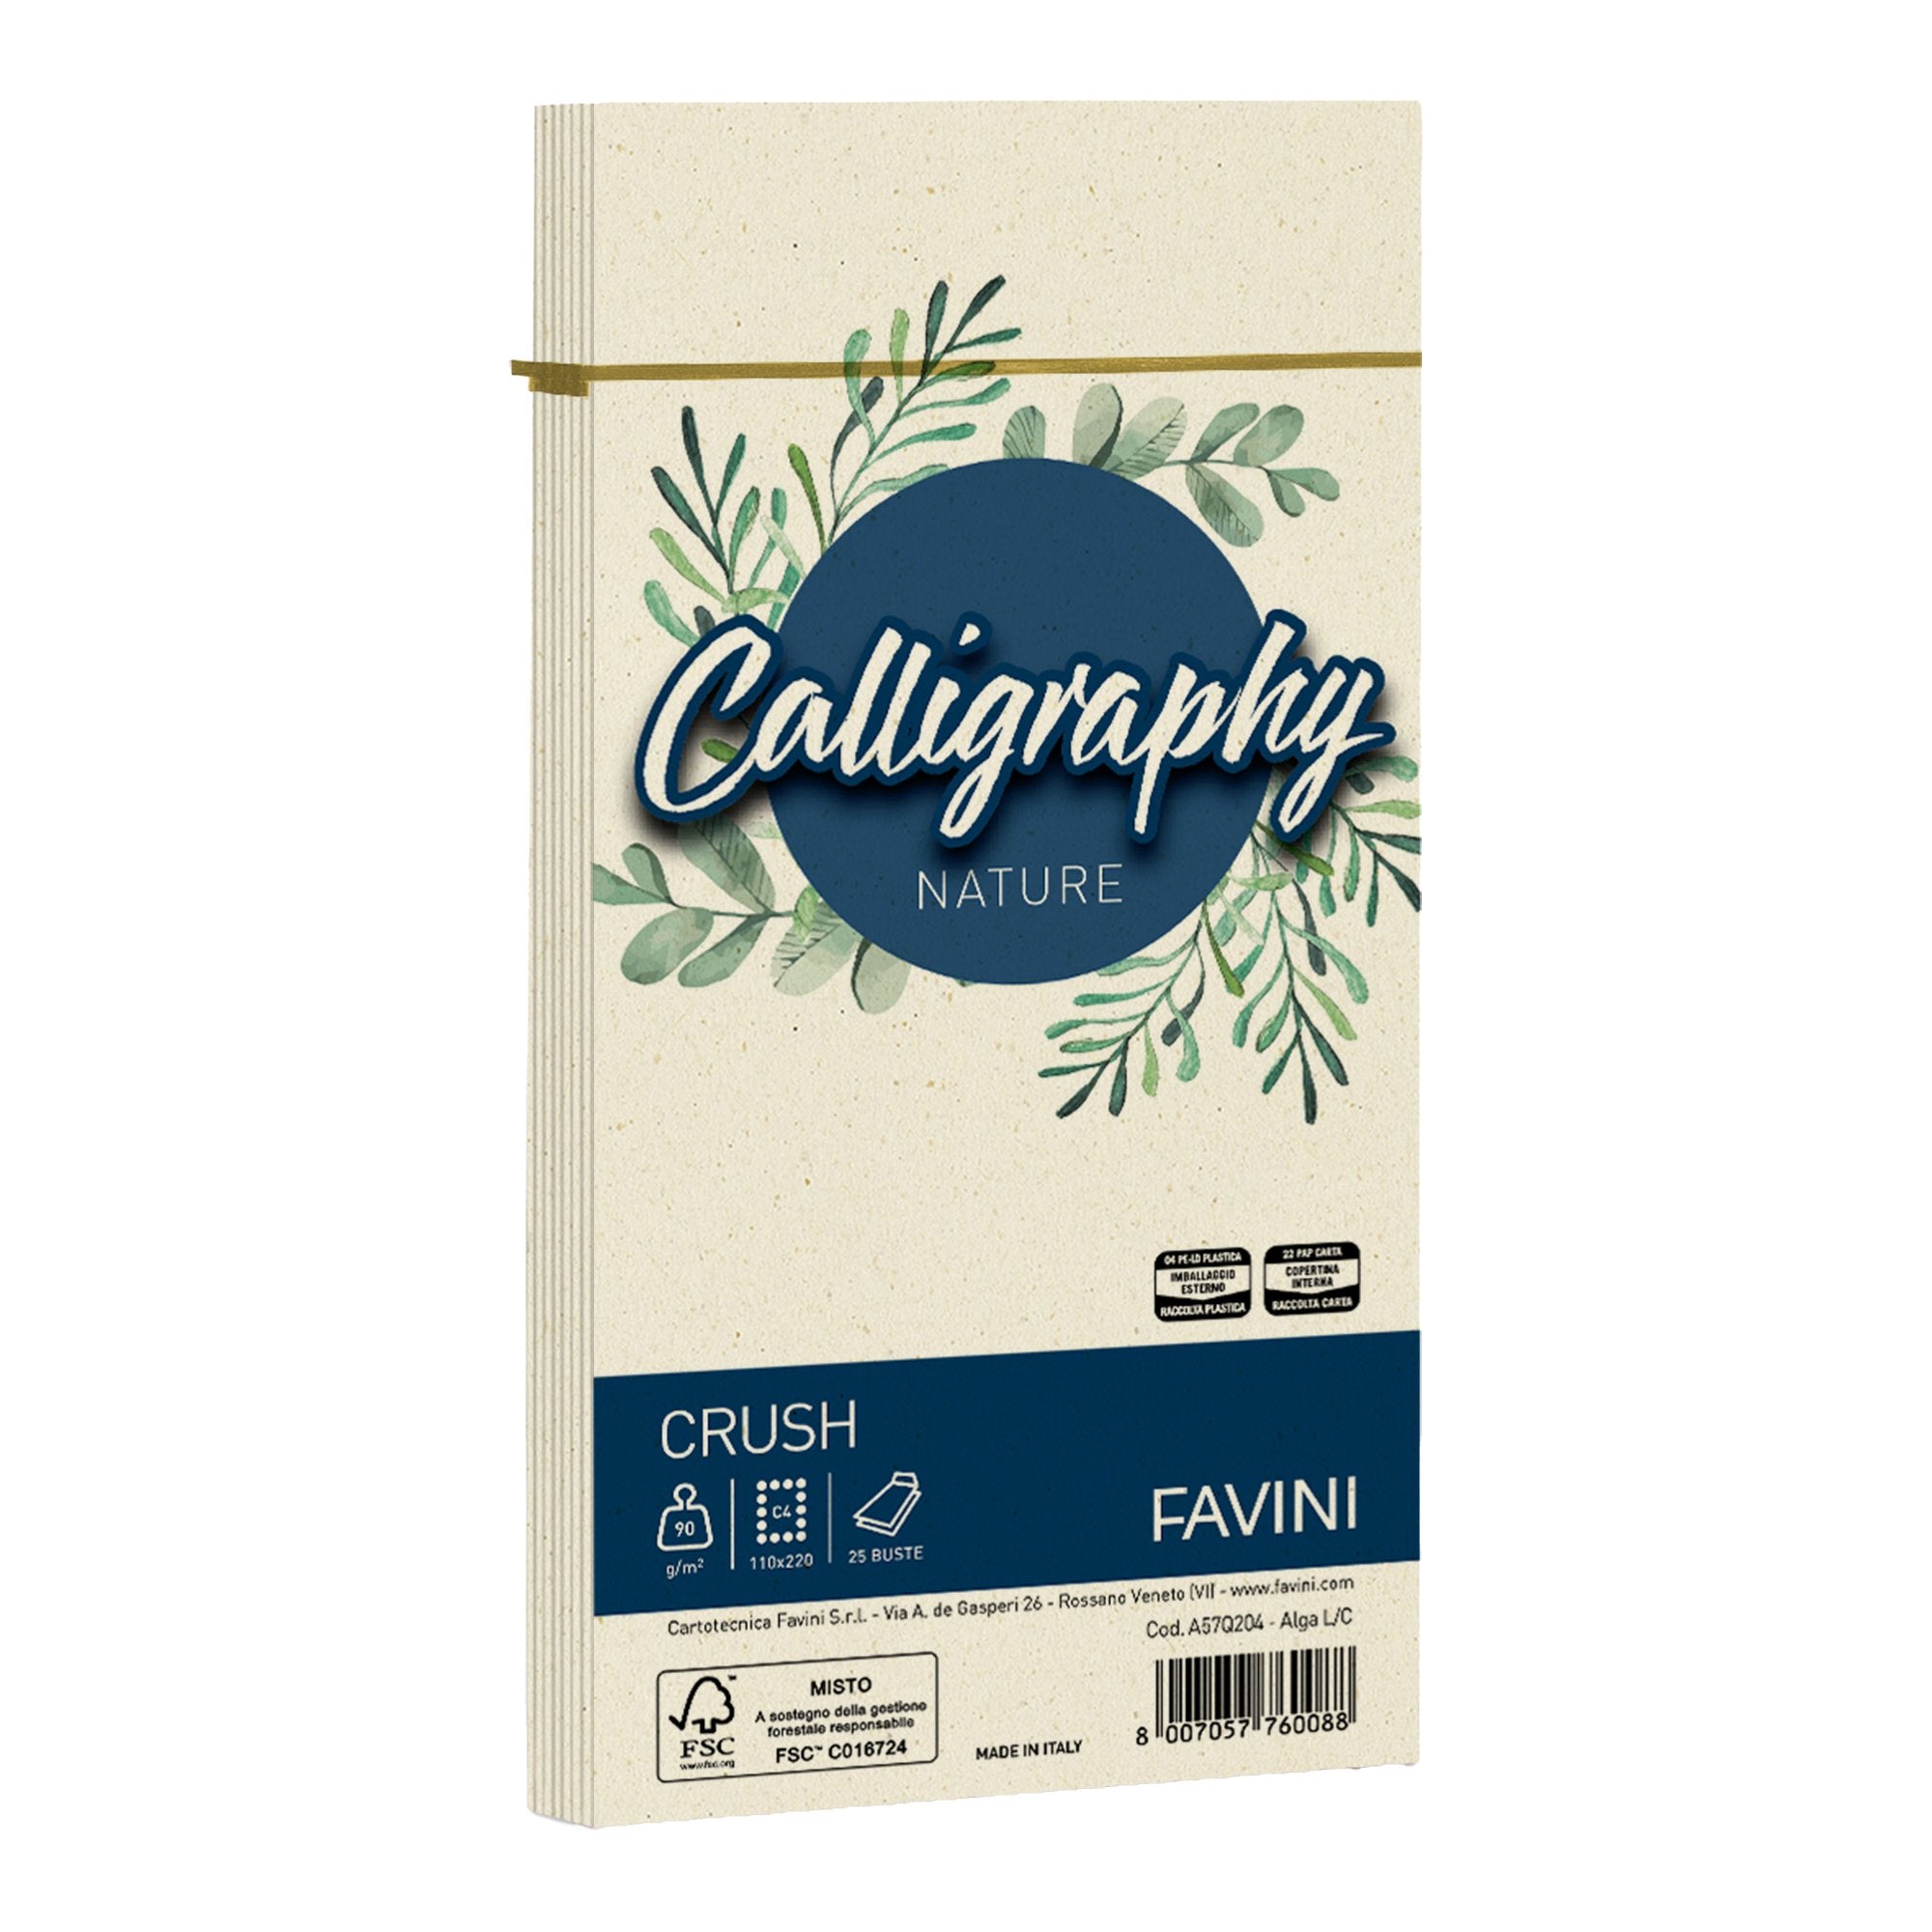 favini-25-buste-calligraphy-nature-crush-90gr-110x220mm-alga